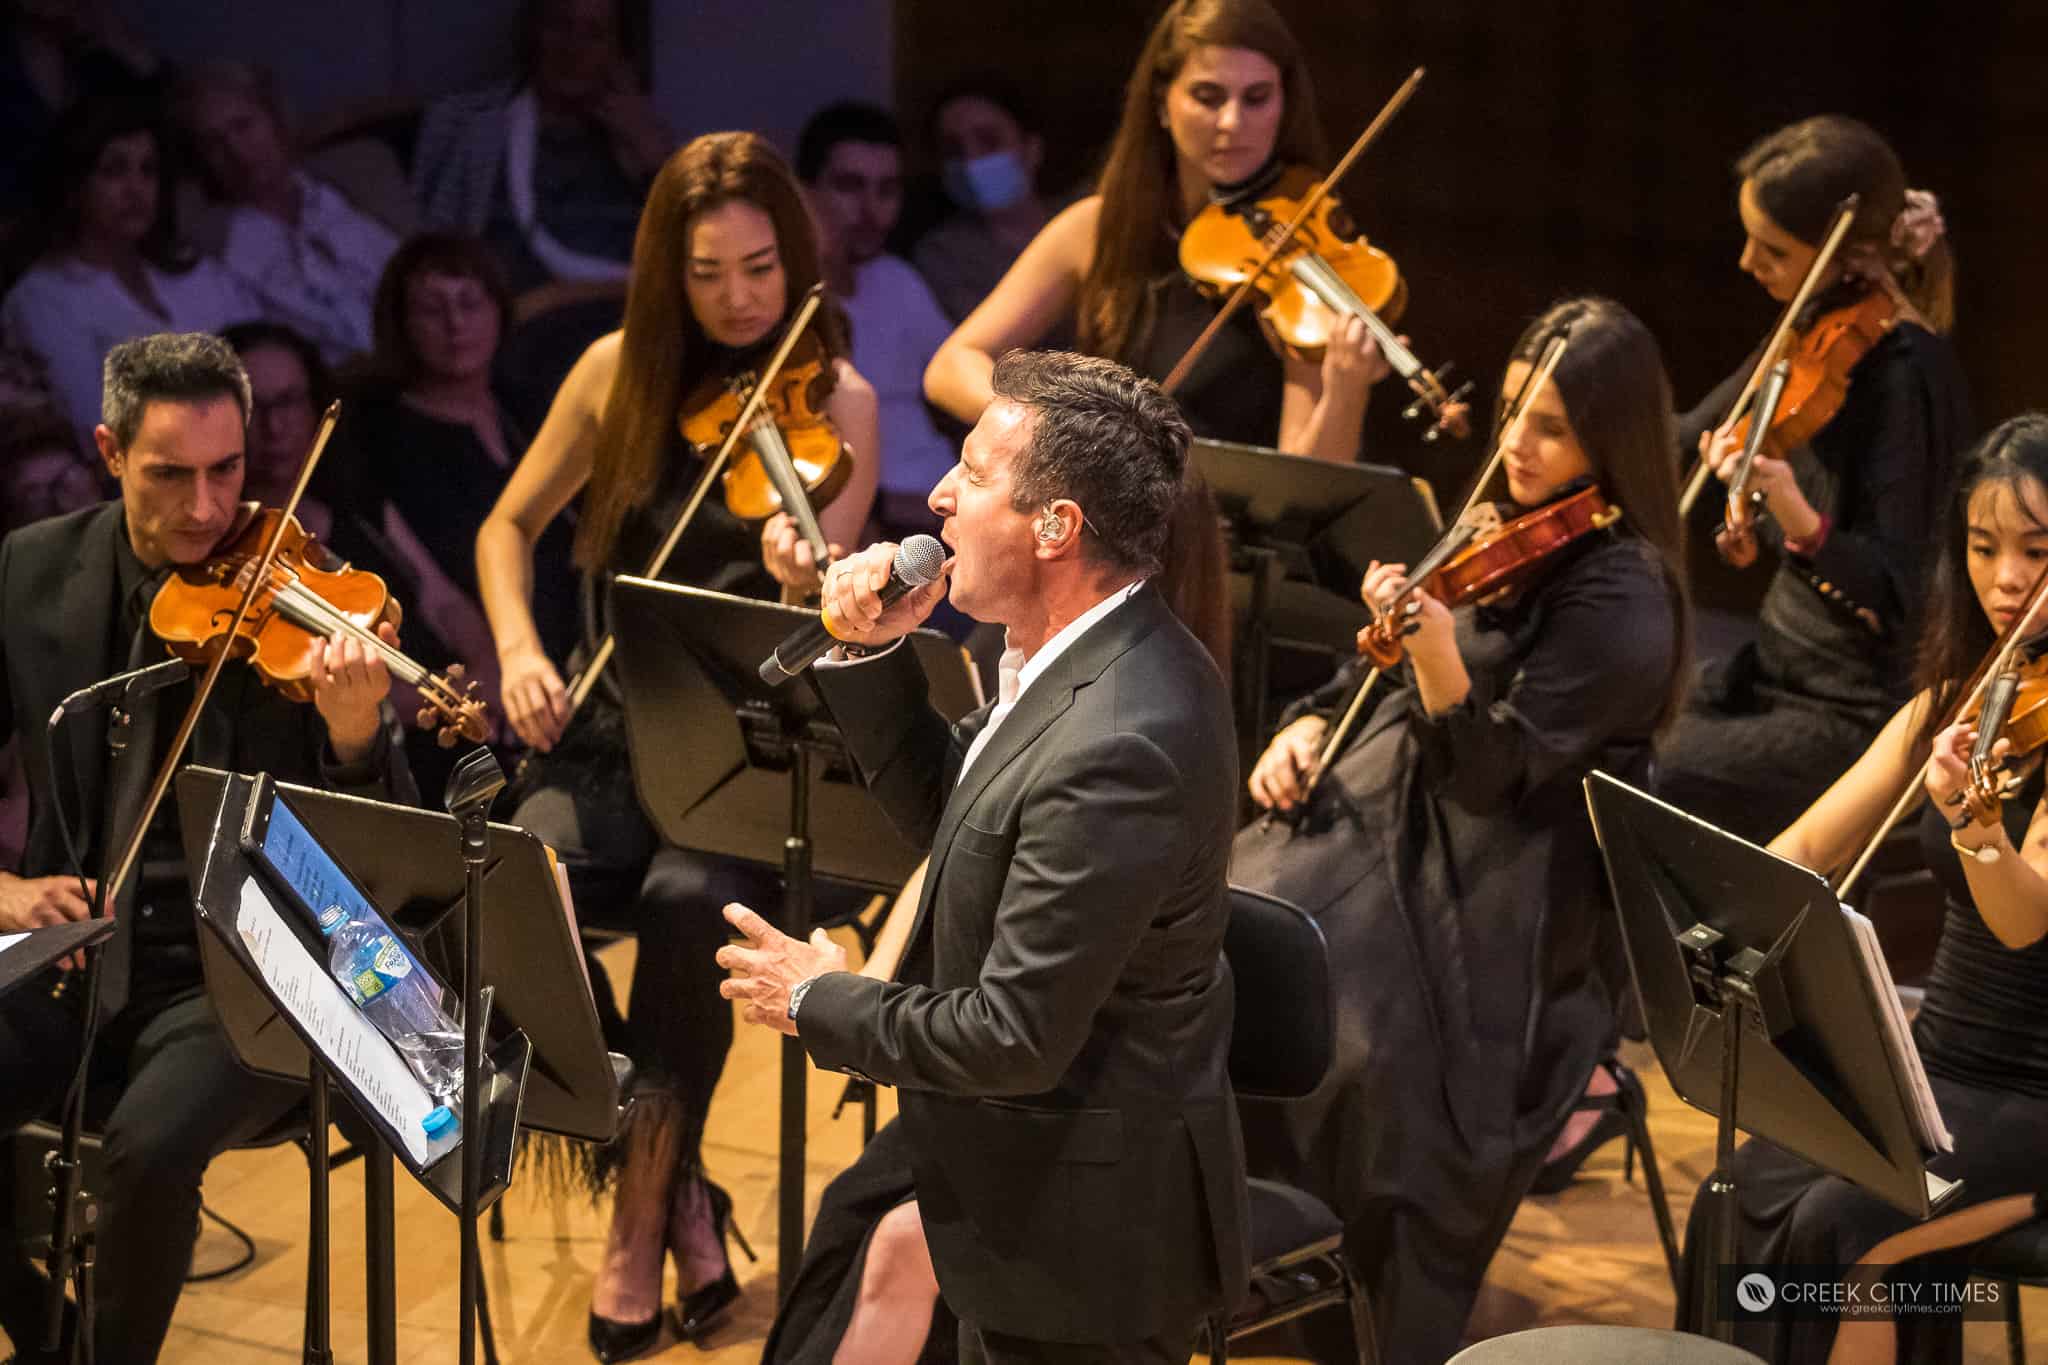 Miki Theodorakis Tribute Concert at City Recital Hall a resounding success 42